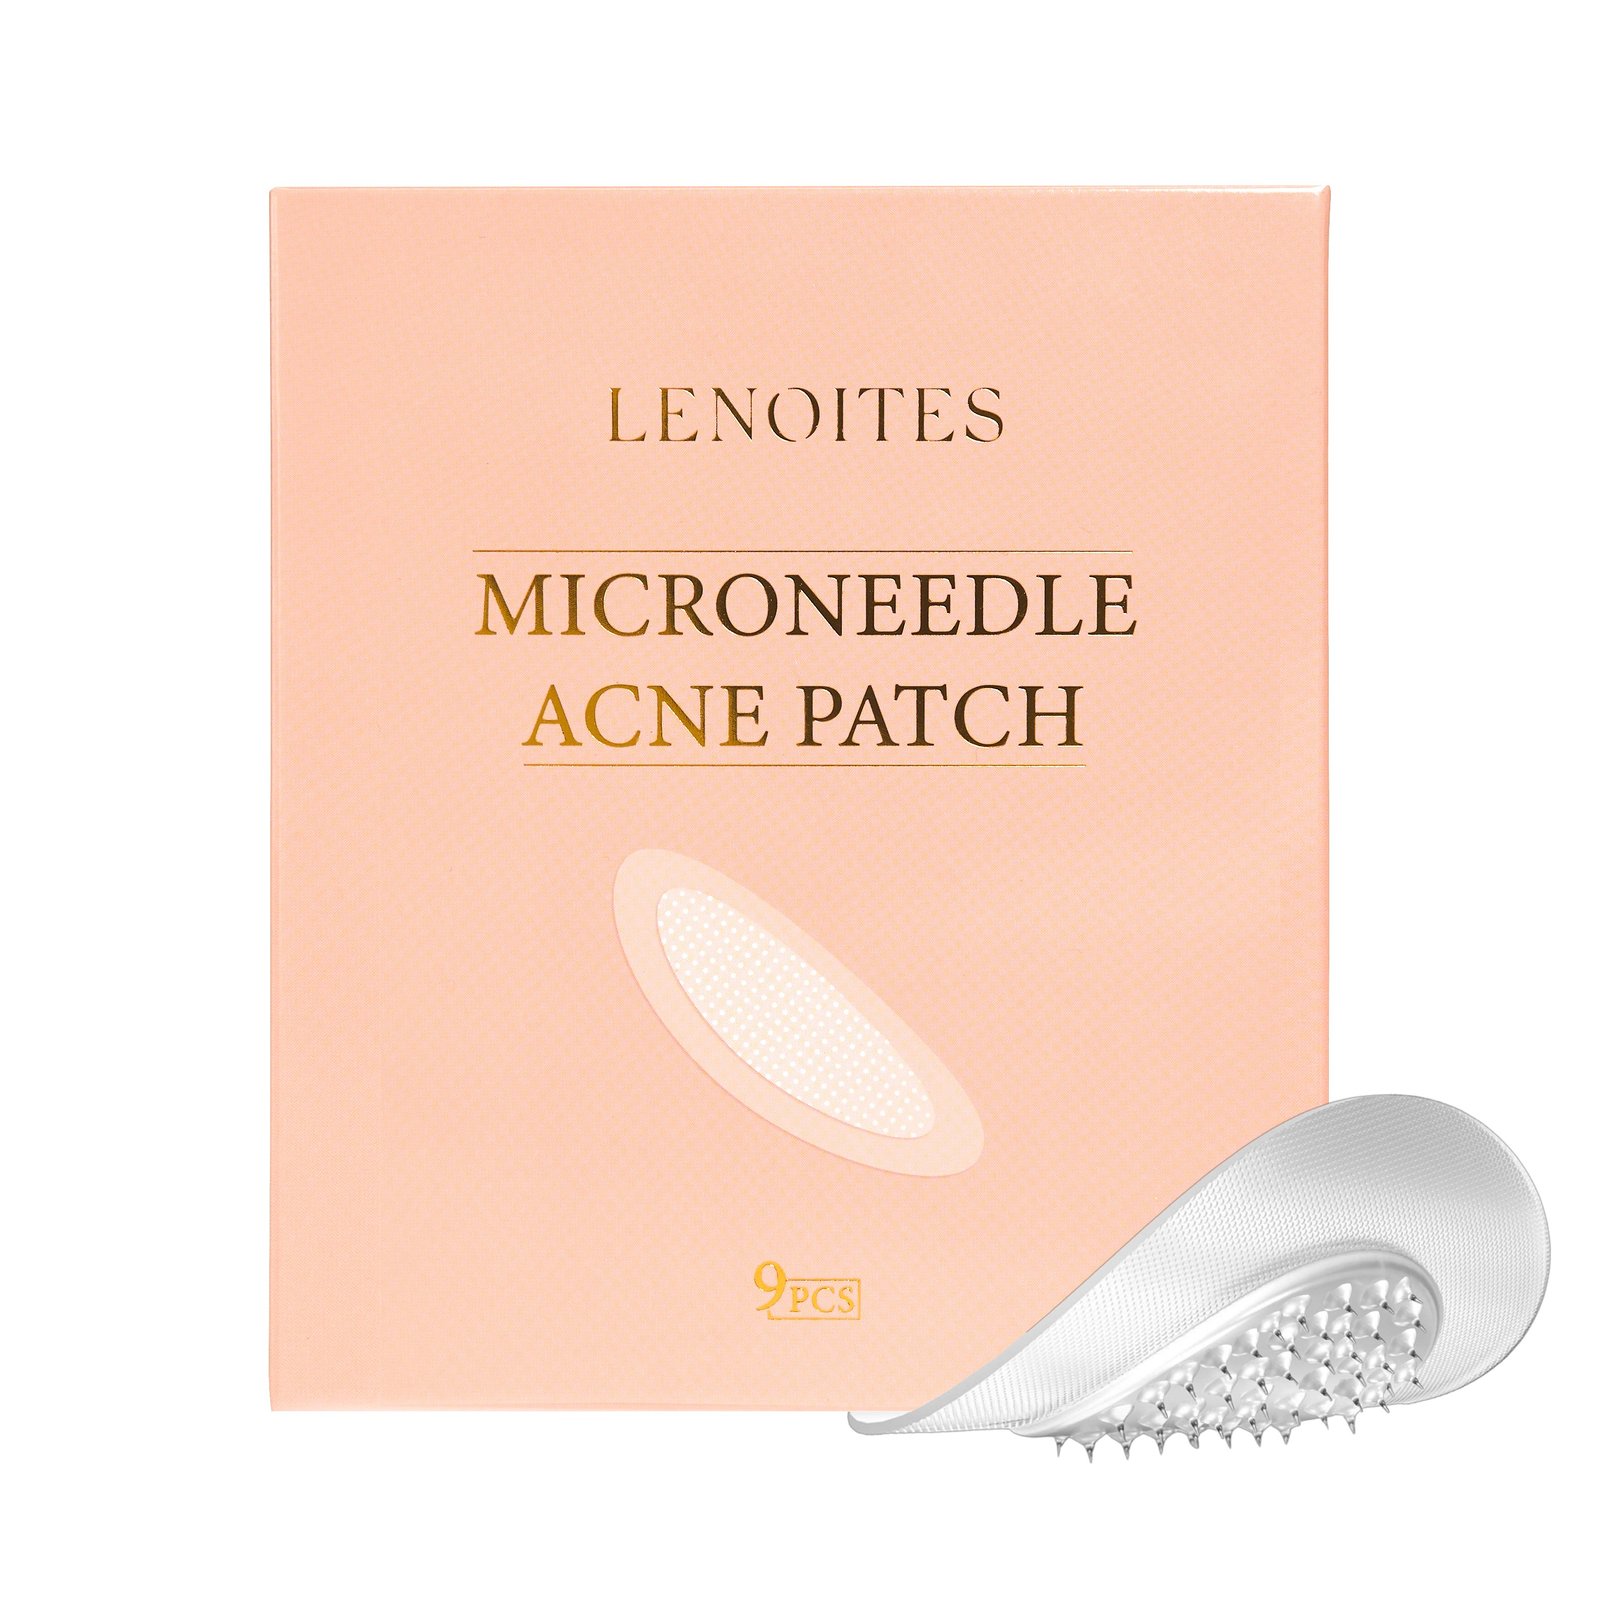 LENOITES Microneedle Acne Patch 9 st